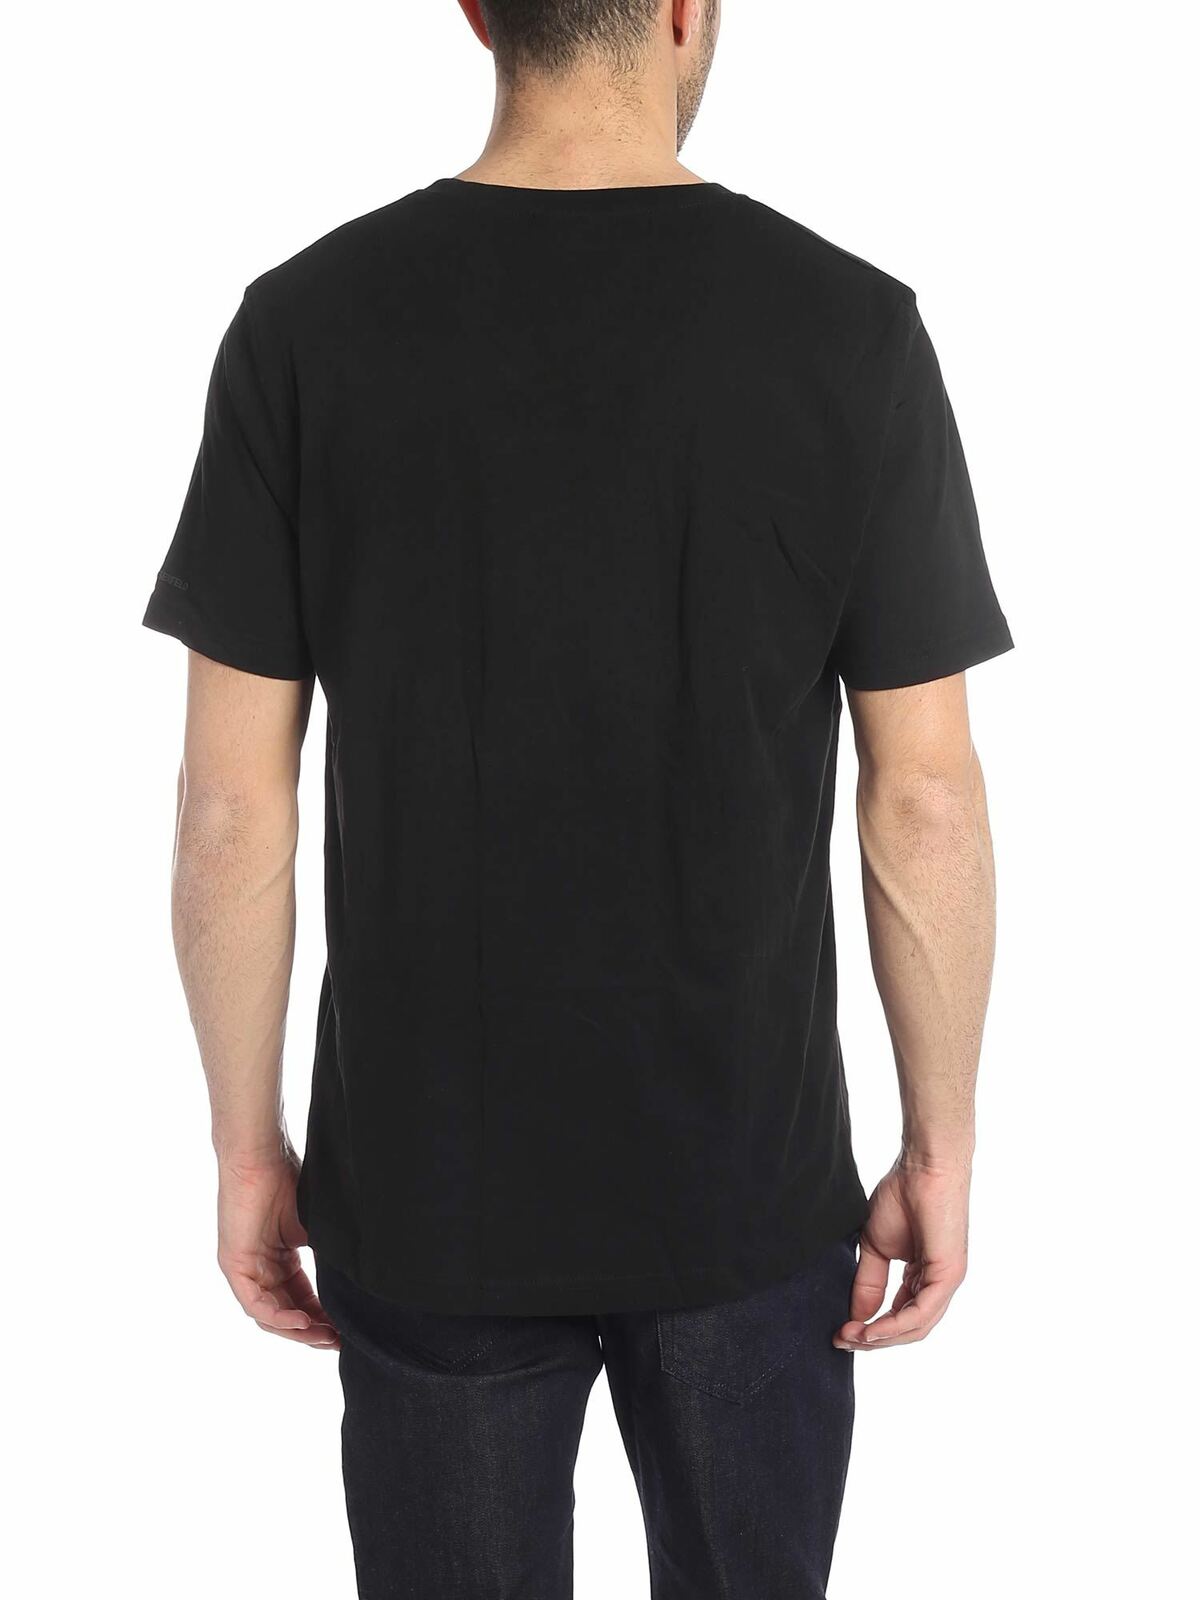 Shop Karl Lagerfeld Set Of 2 Black T-shirts